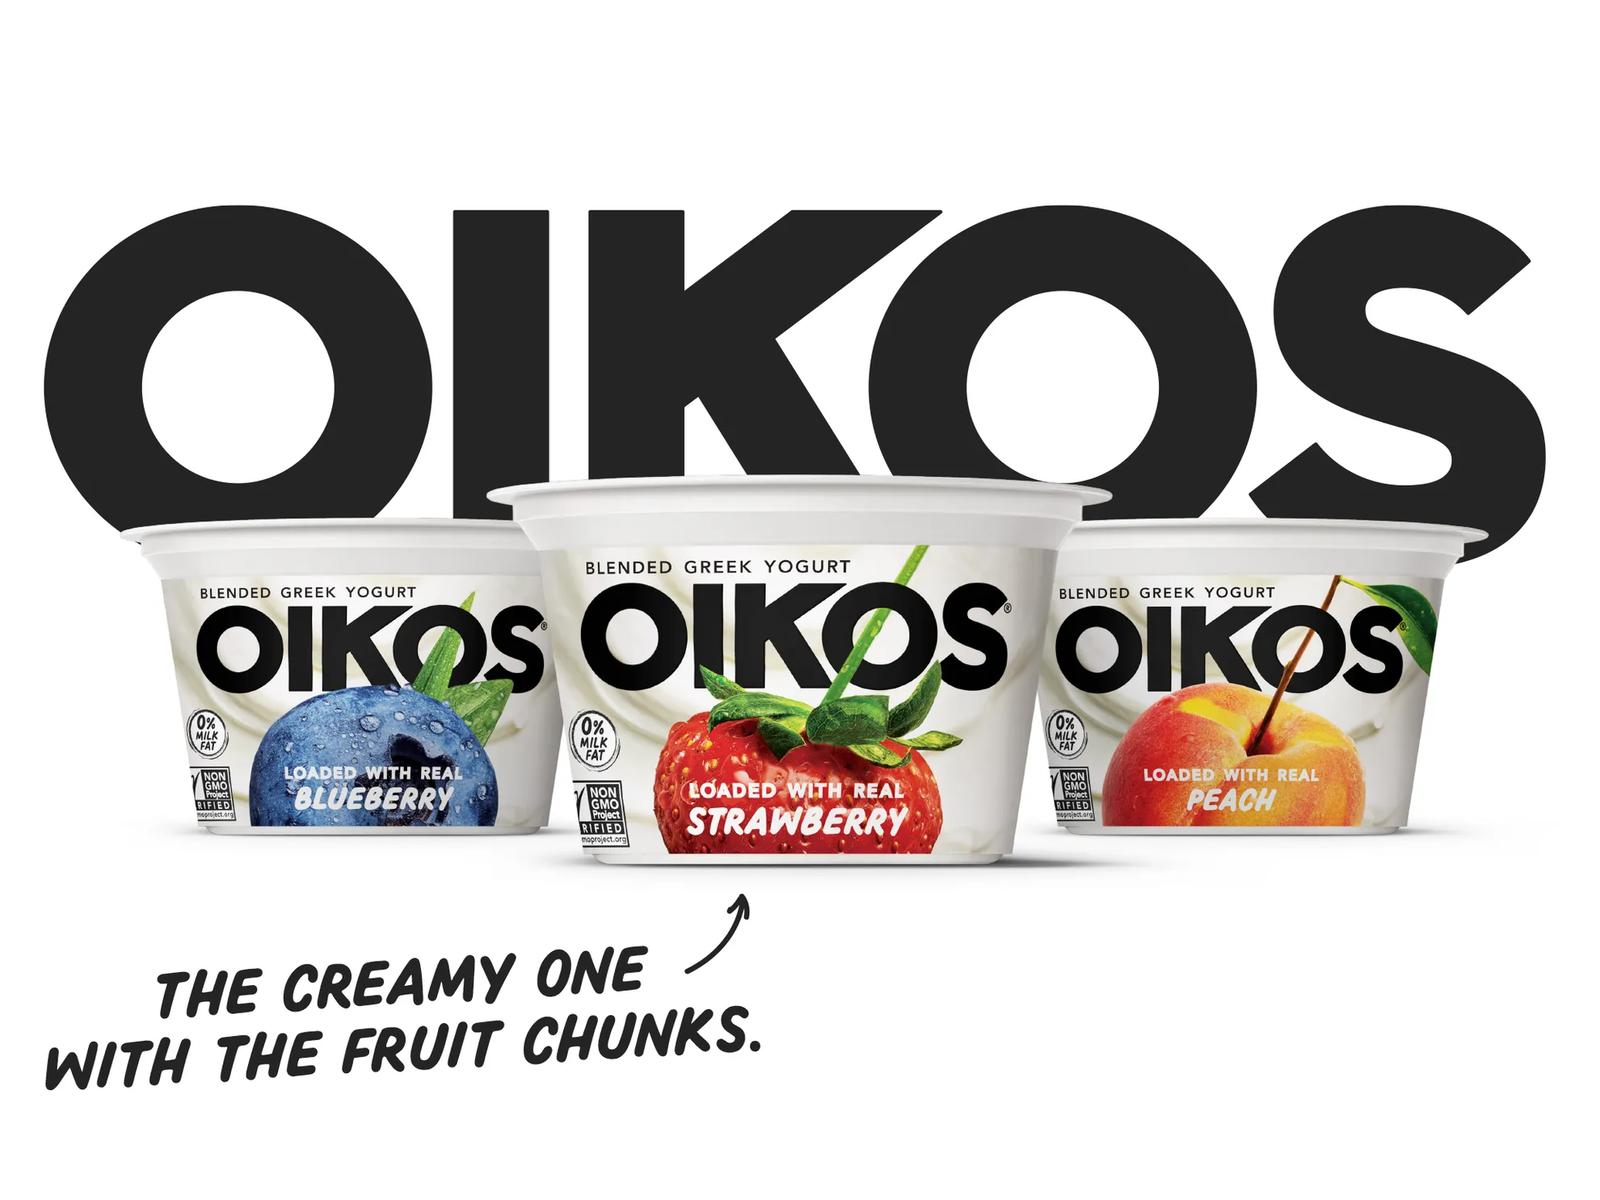 Oikos: from 2020 lockdown to maverick greek yogurt.